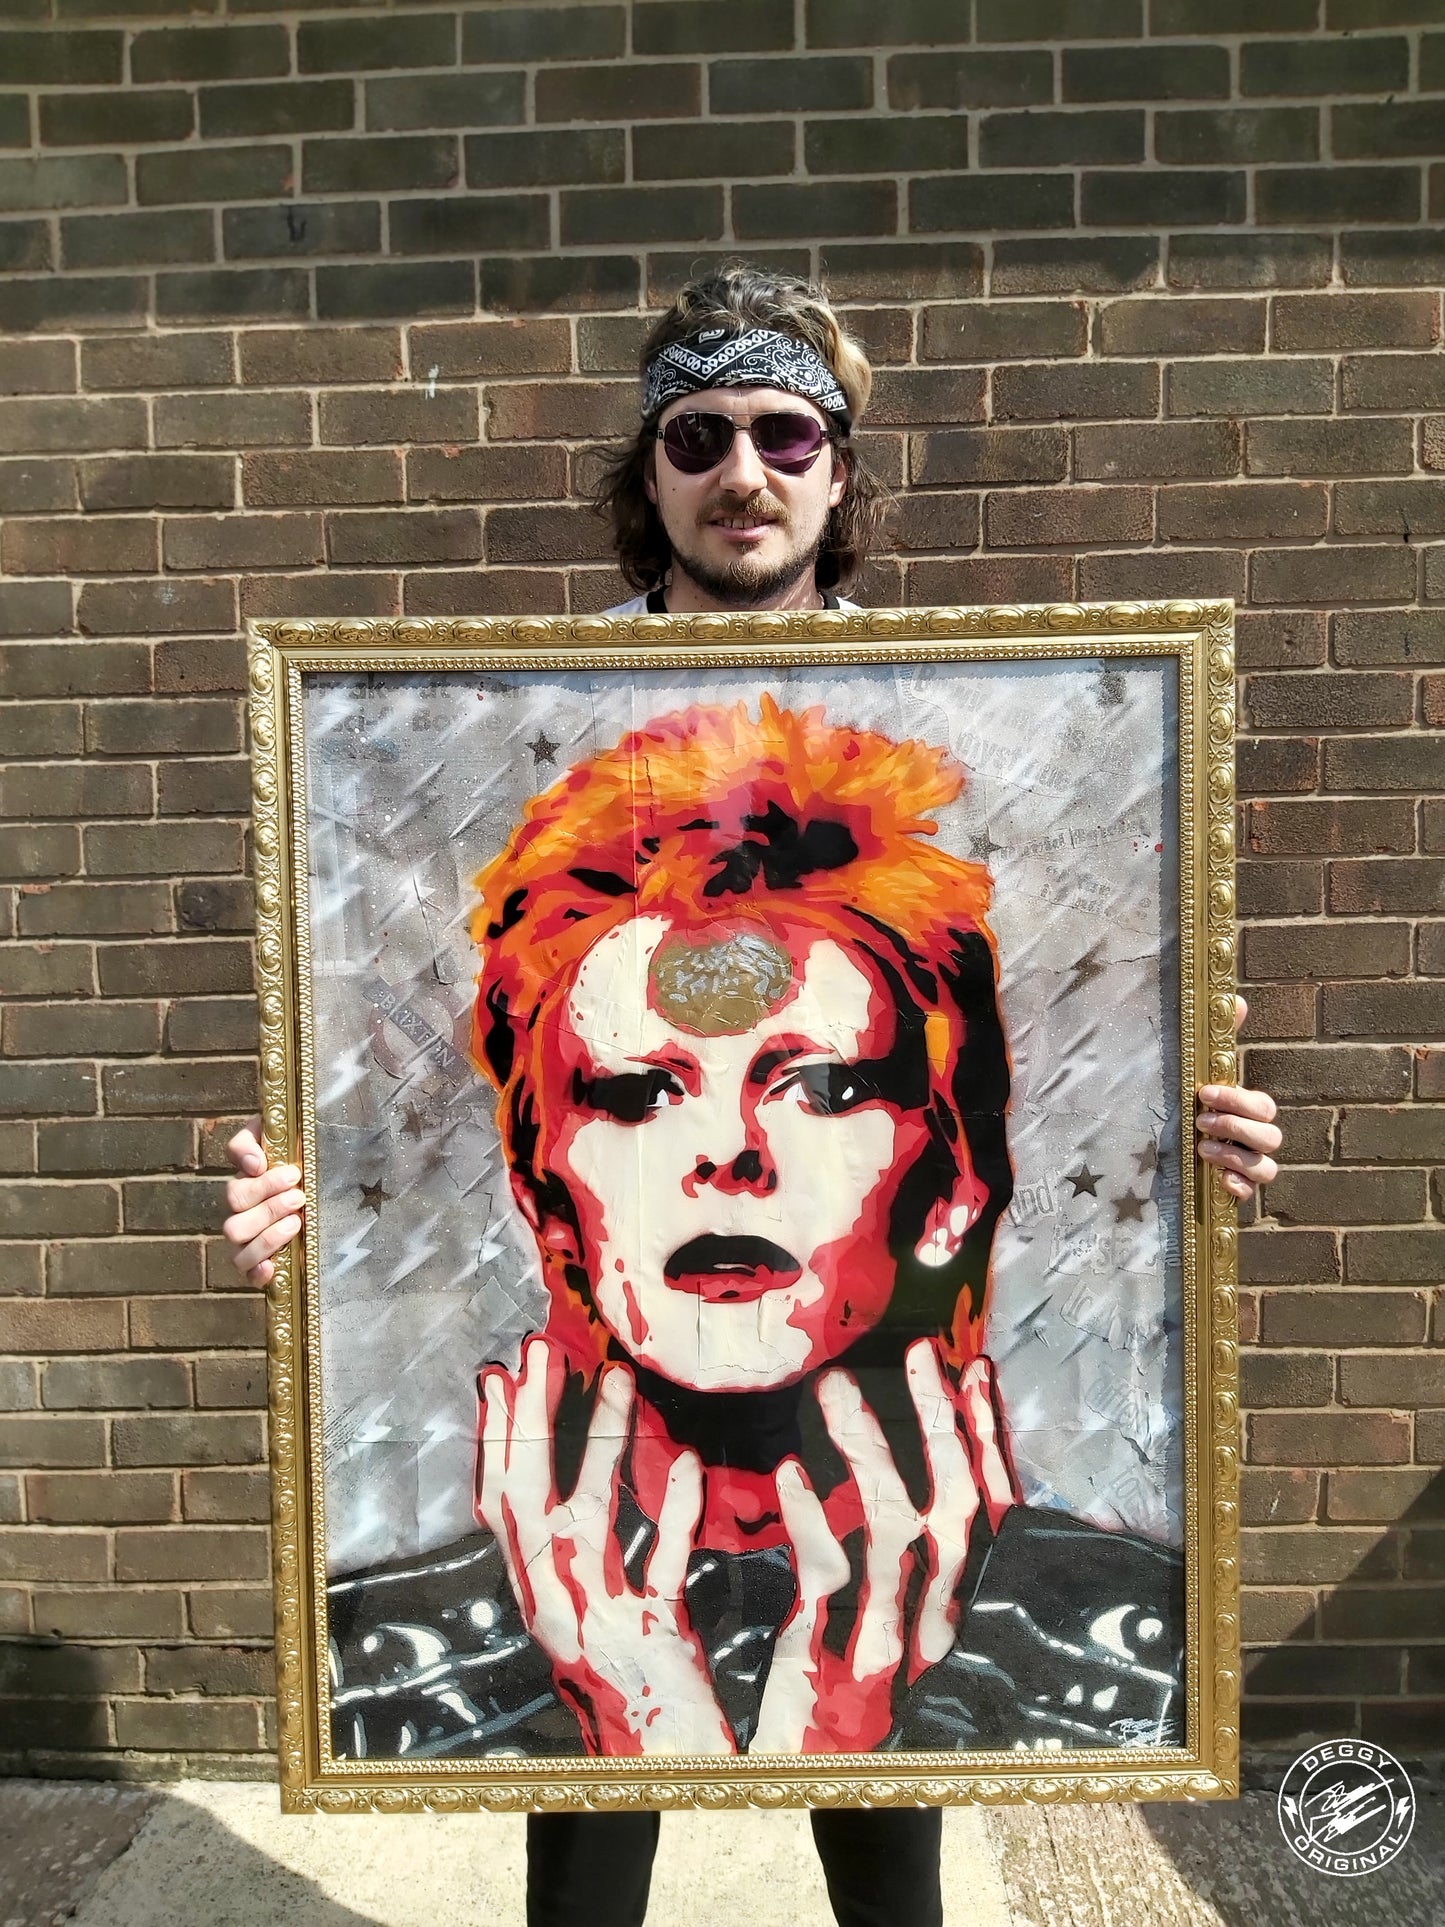 David Bowie "Ziggy Stardust" Original Mixed Media Painting (29" x 36" Frame Size)